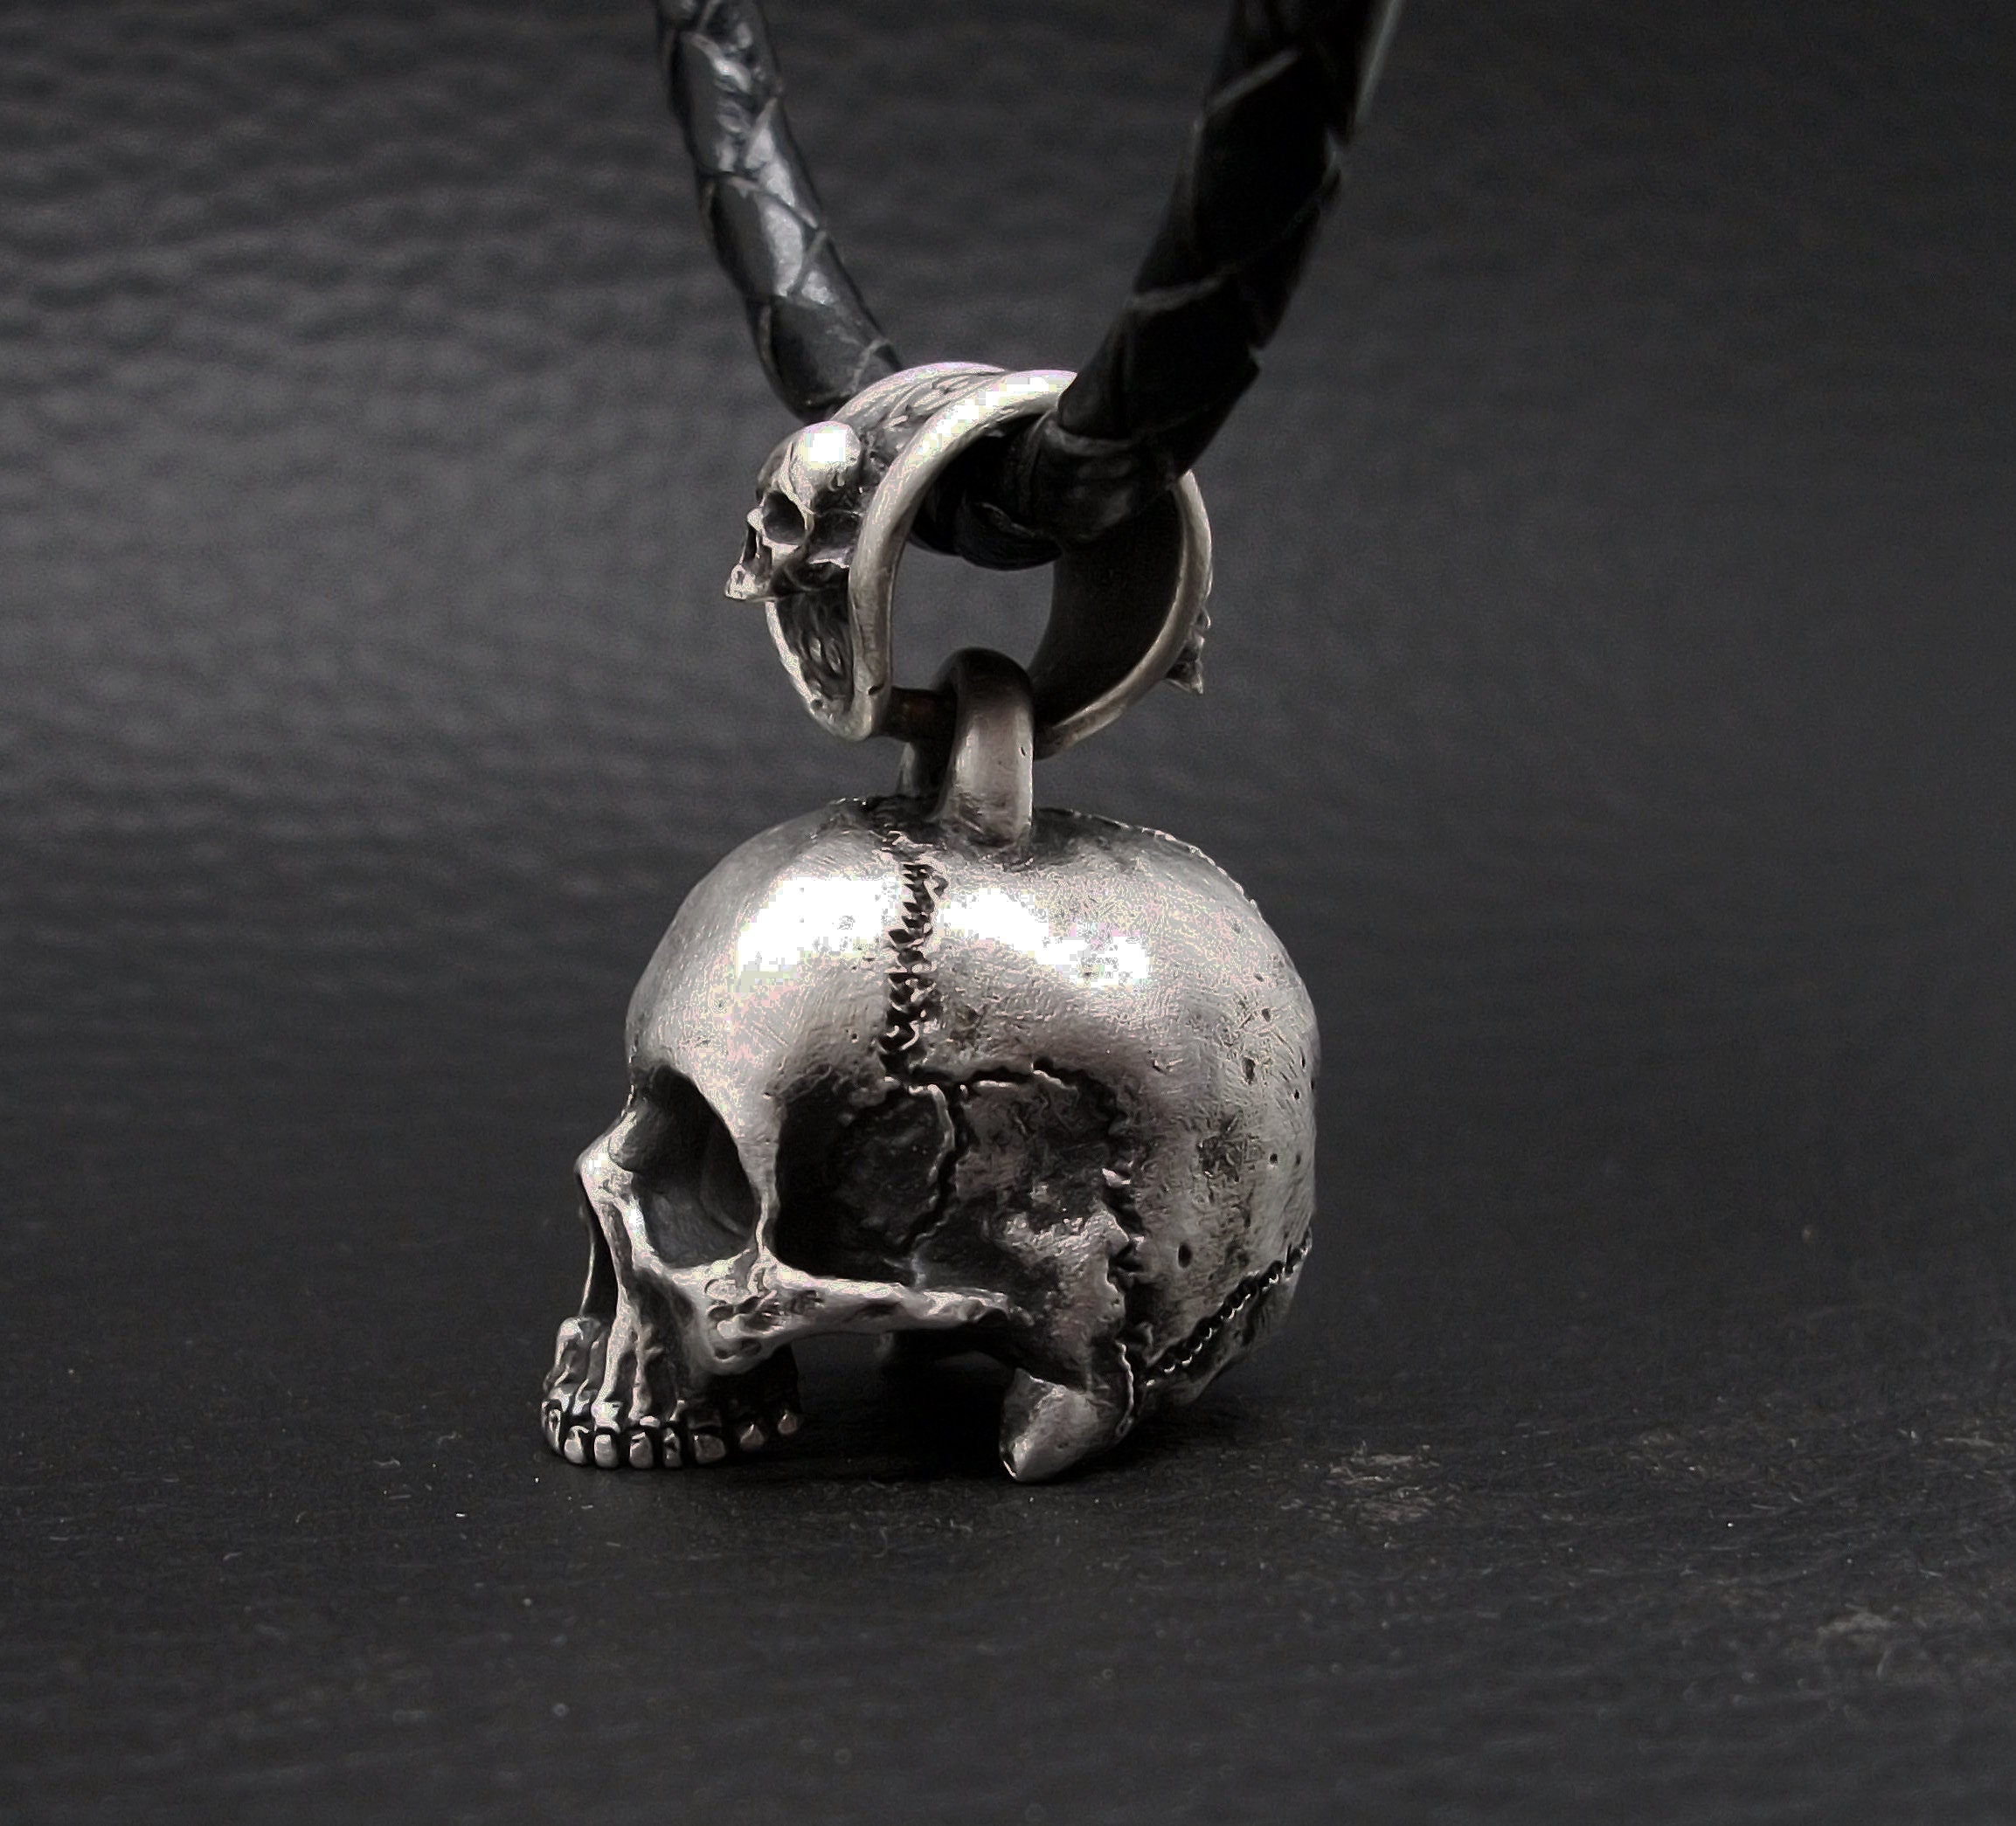 Skull pendant - Sterling Silver Heavy skull Pendant - 40 grams Designed from real human skull